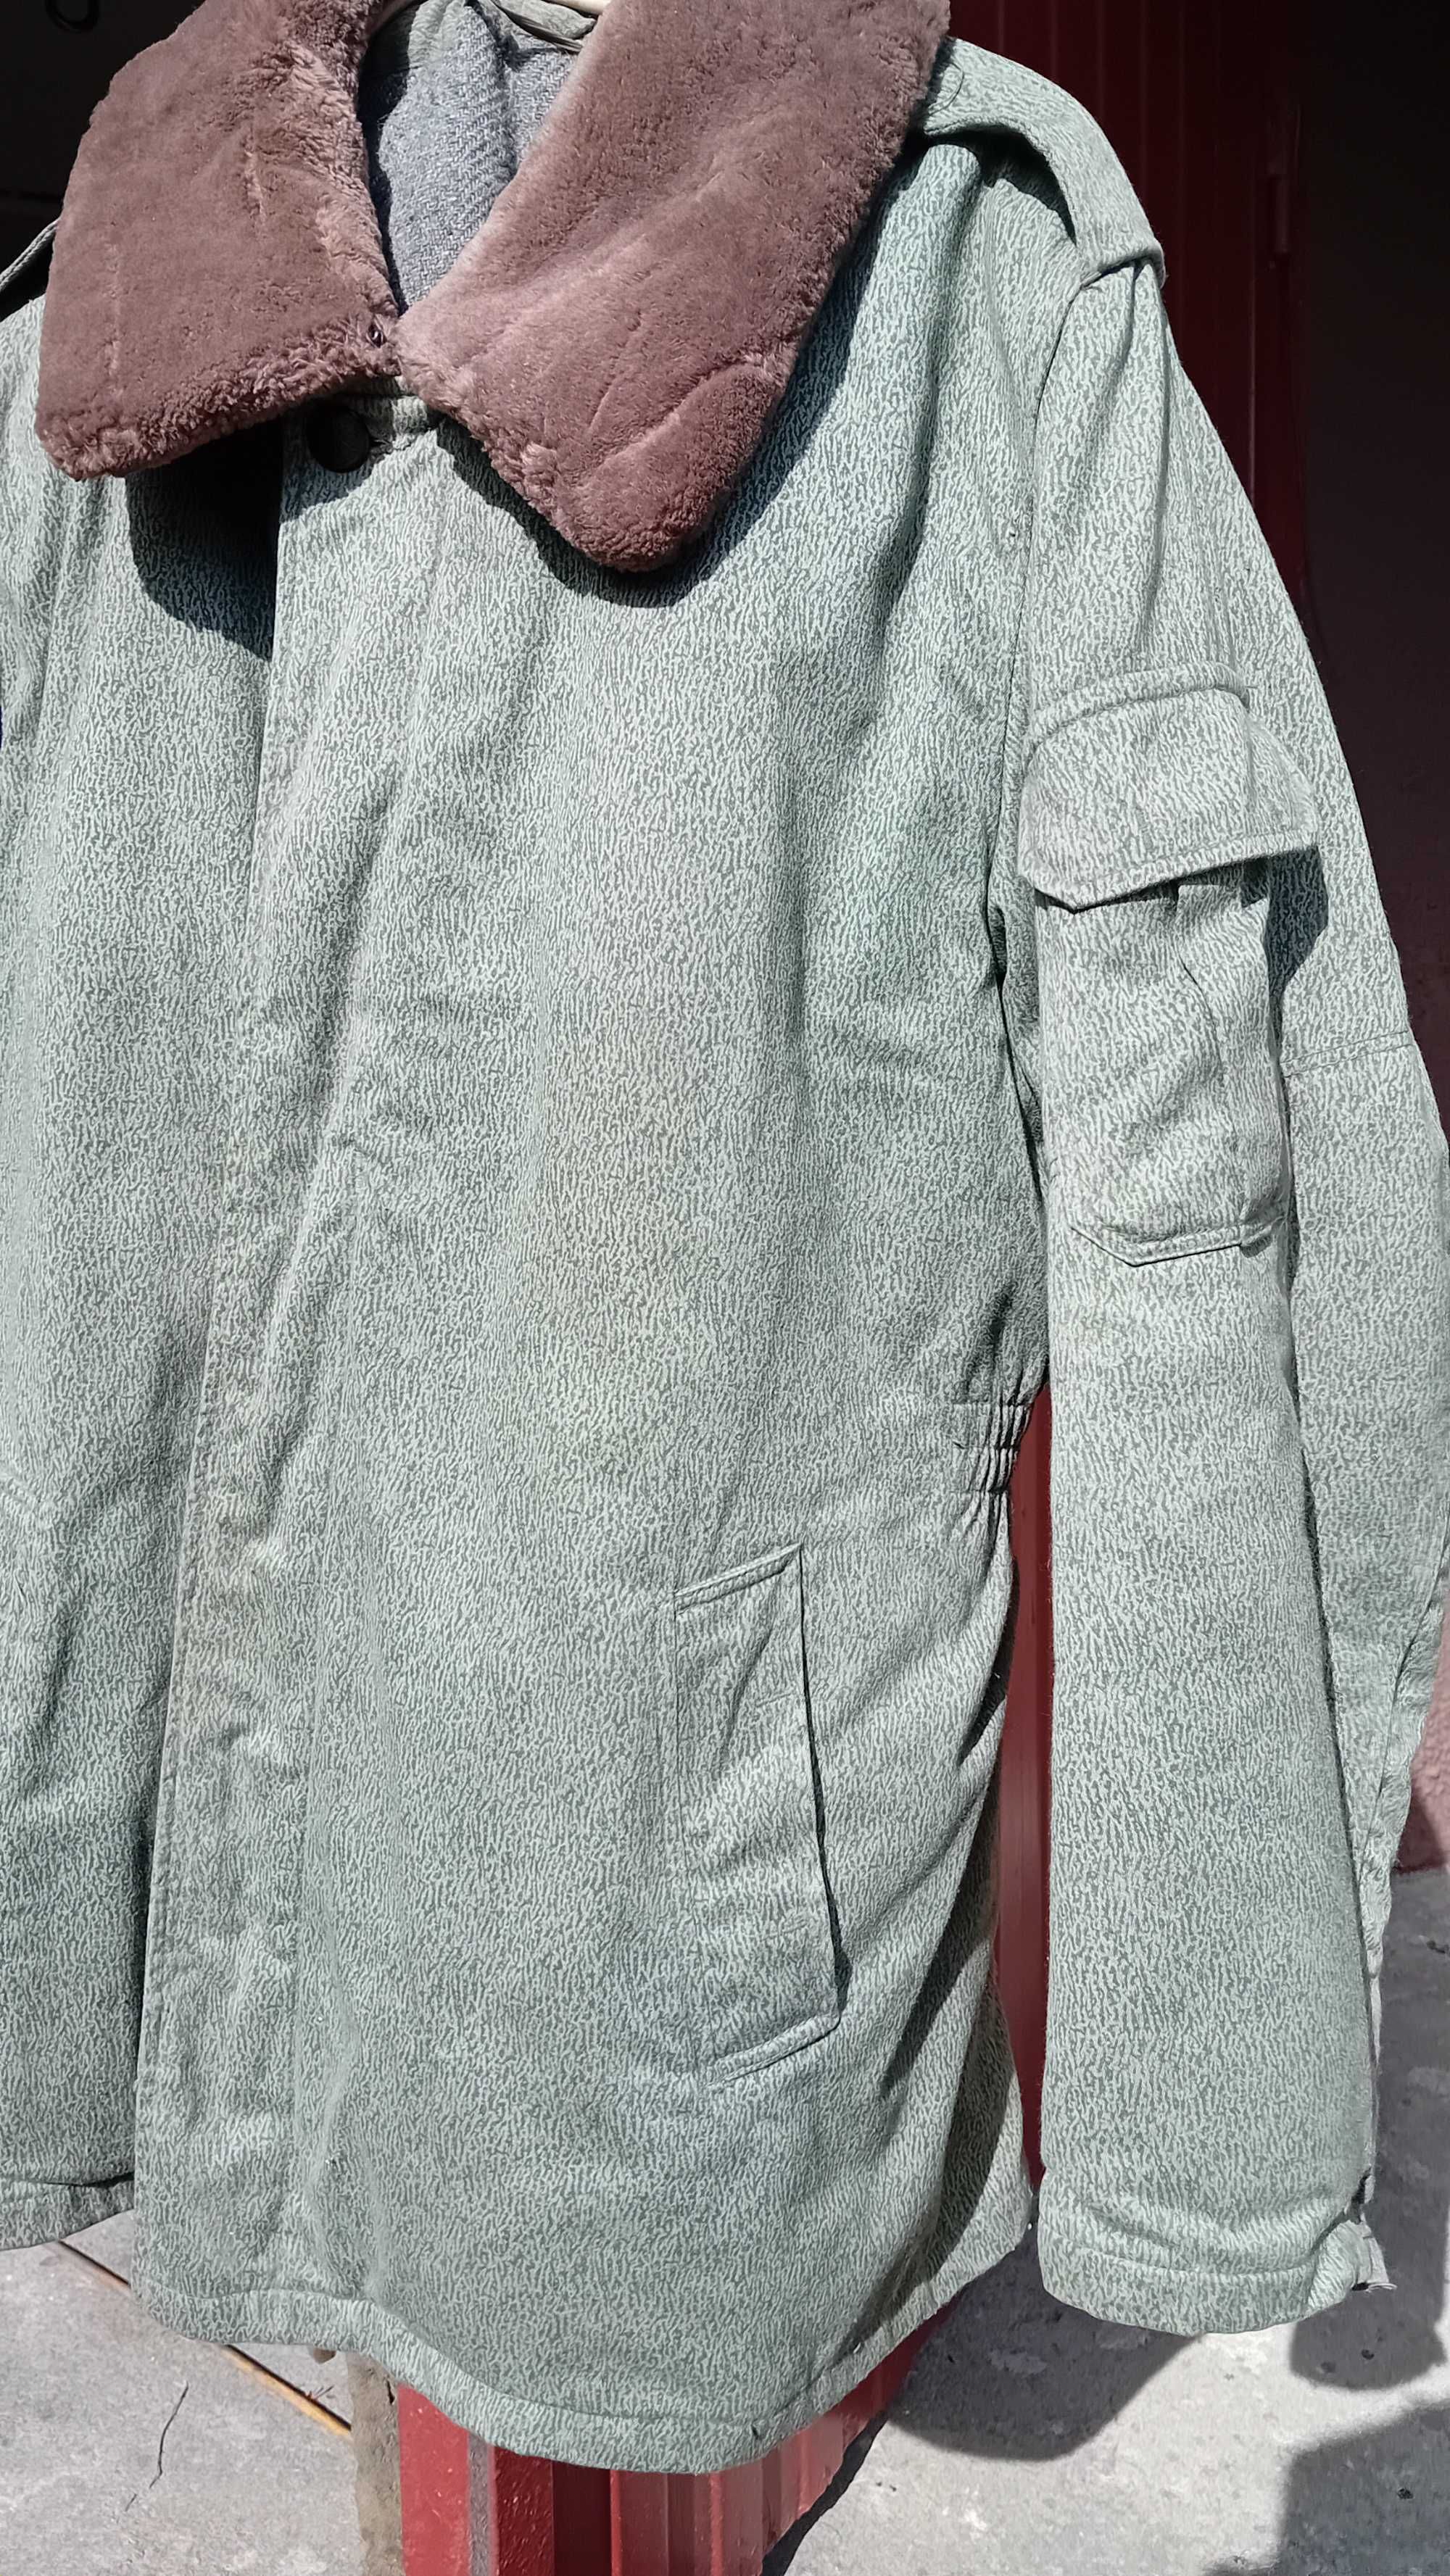 Unikatowa kurtka wojskowa zimowa bechatka z 1984 roku, stare moro